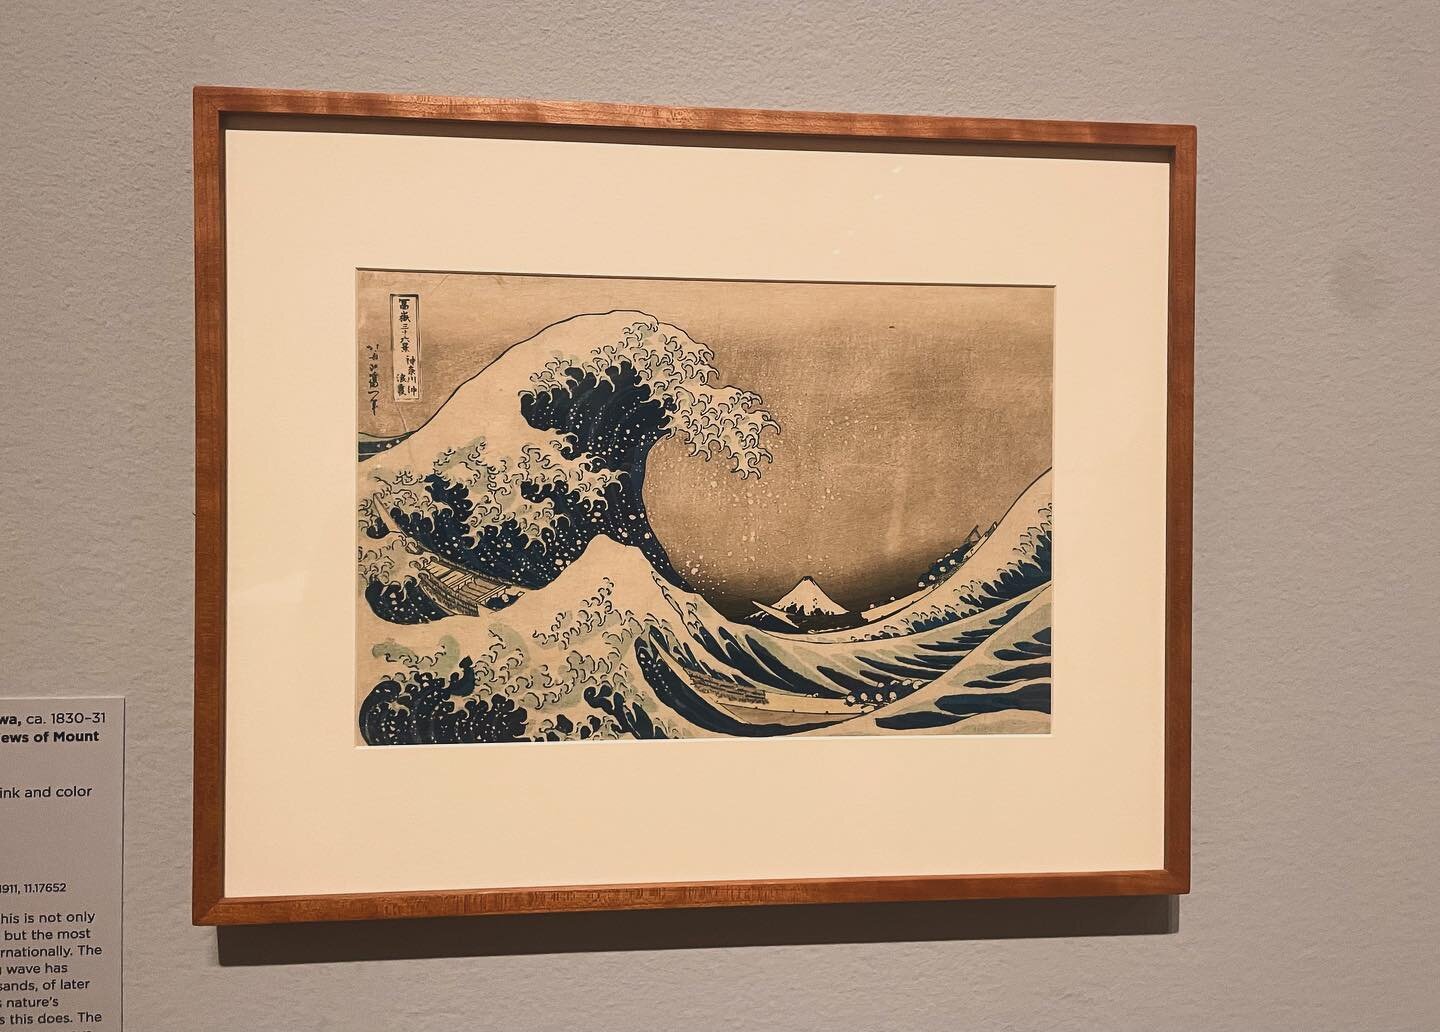 From the Hokusai exhibit at the @seattleartmuseum 
__________
#katsushikahokusai #hokusai #art #thegreatwave #thegreatwaveoffkanagawa #seattle #seattleartmuseum #woodblockprint #japanesewoodblockprint #printmaker #painter #ukiyoe #ukiyoeart